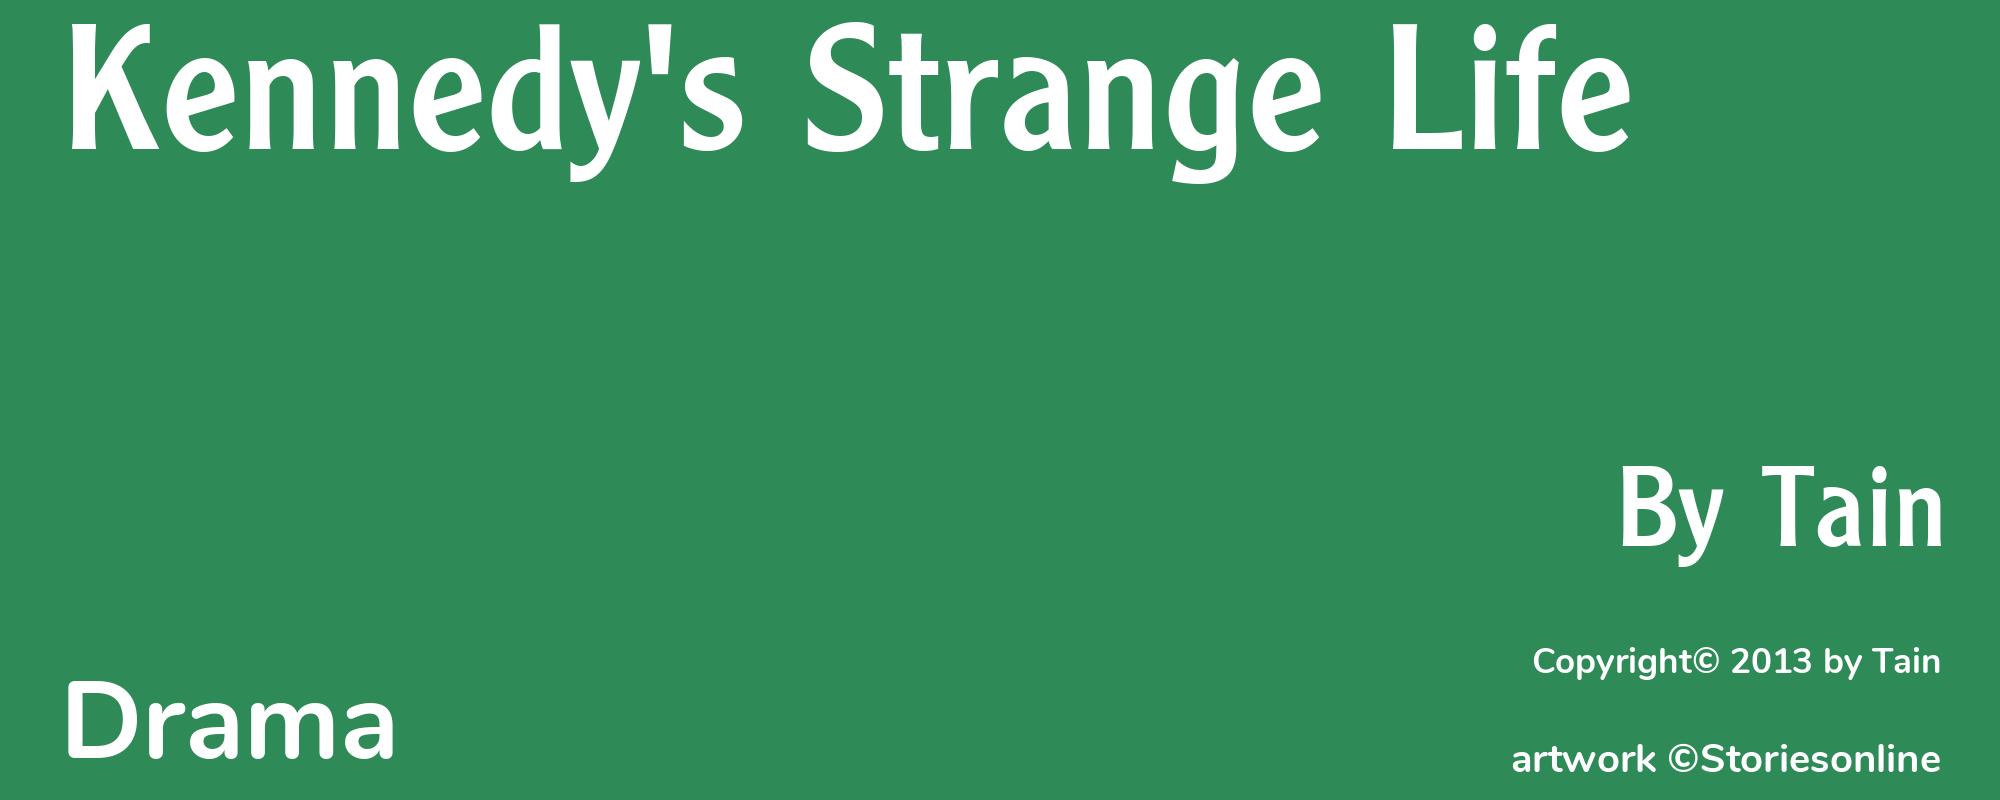 Kennedy's Strange Life - Cover